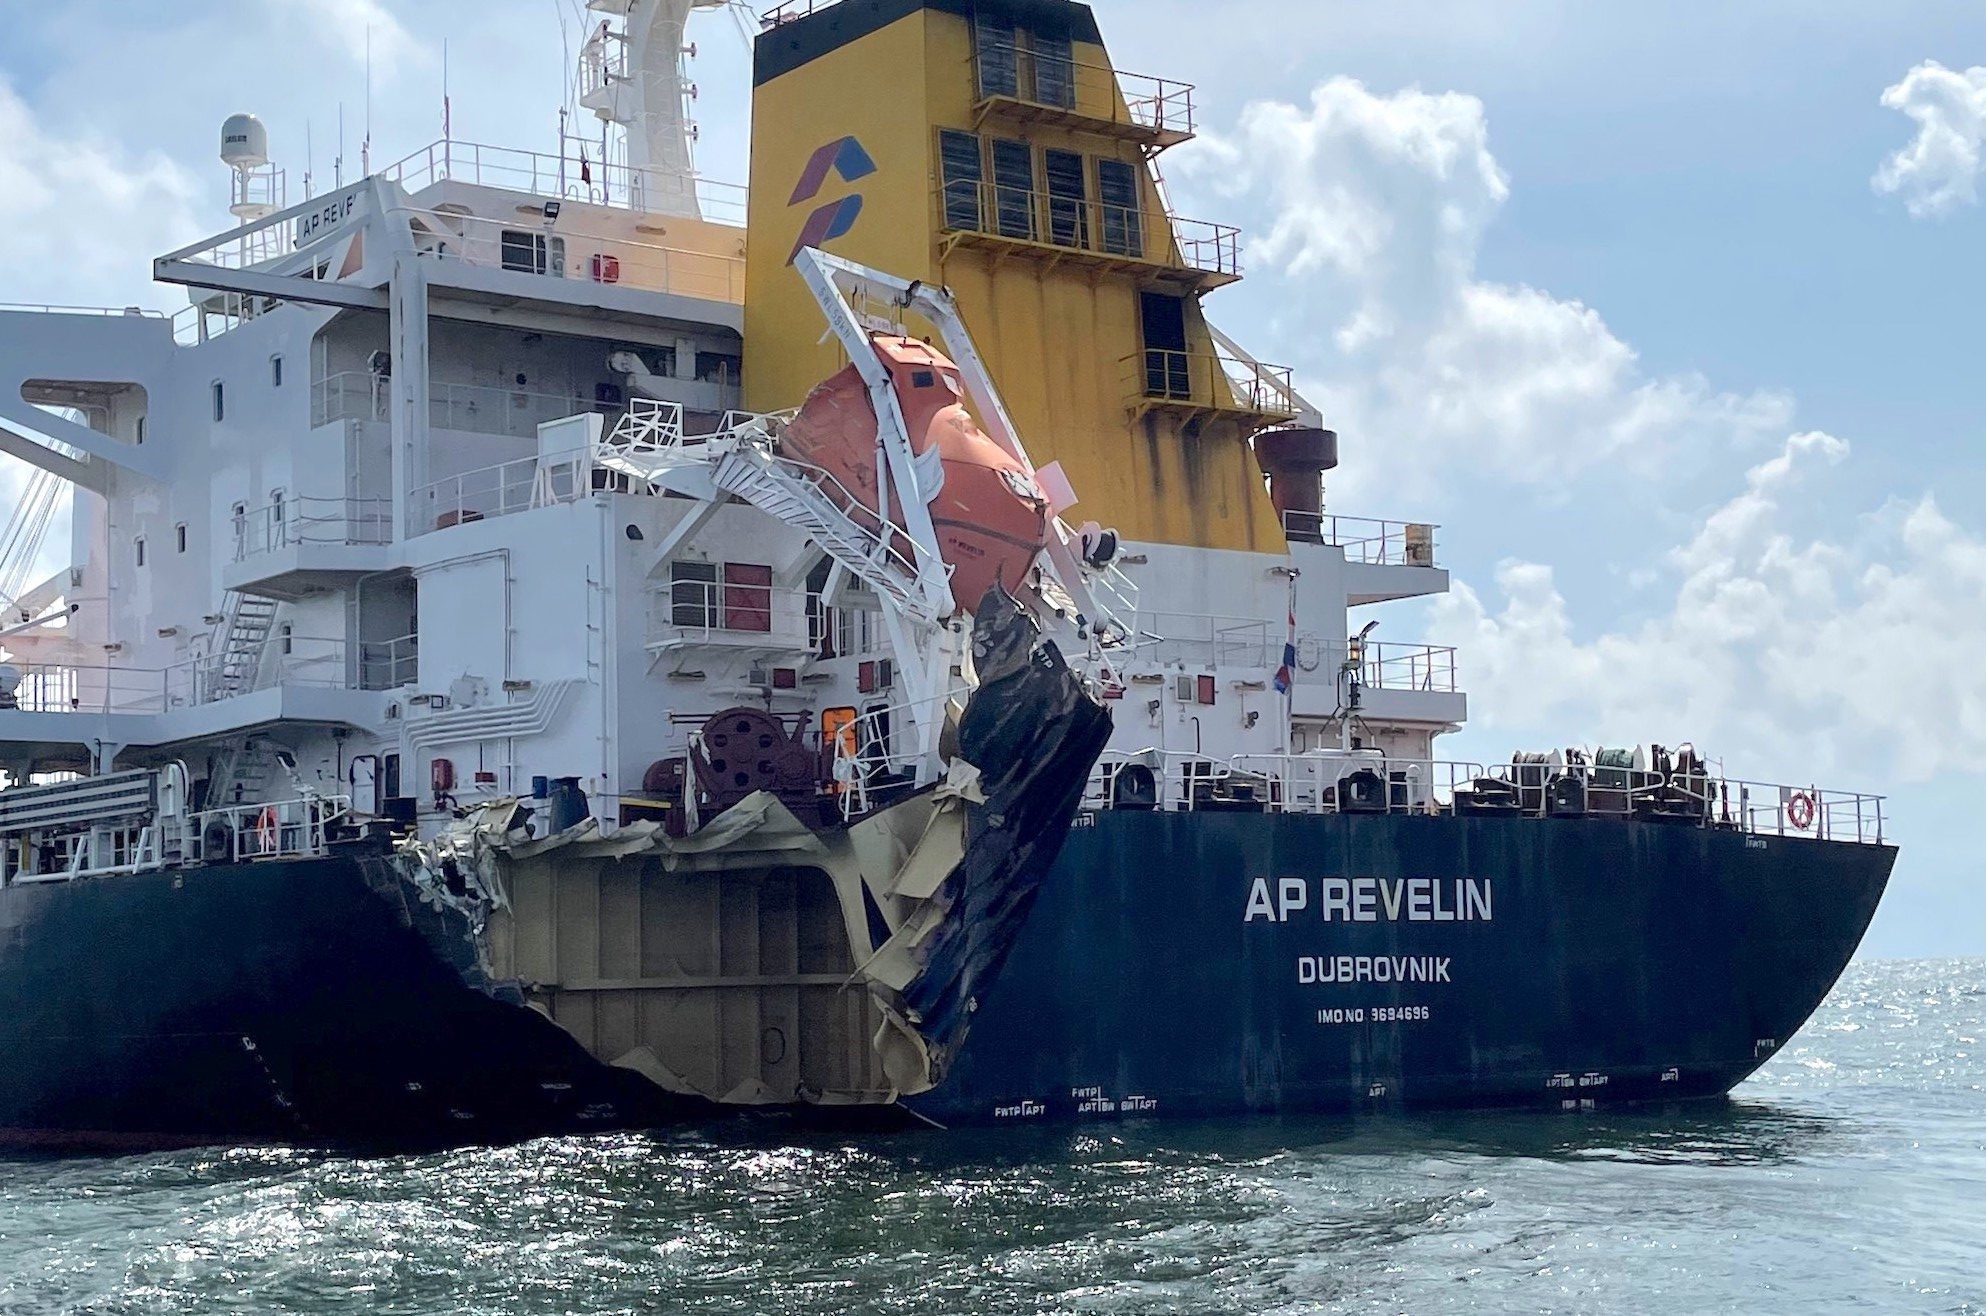 08.25.22_ACCIDENTNEWS_Cargo Ship Crash in Texas Ship Channel_Photo